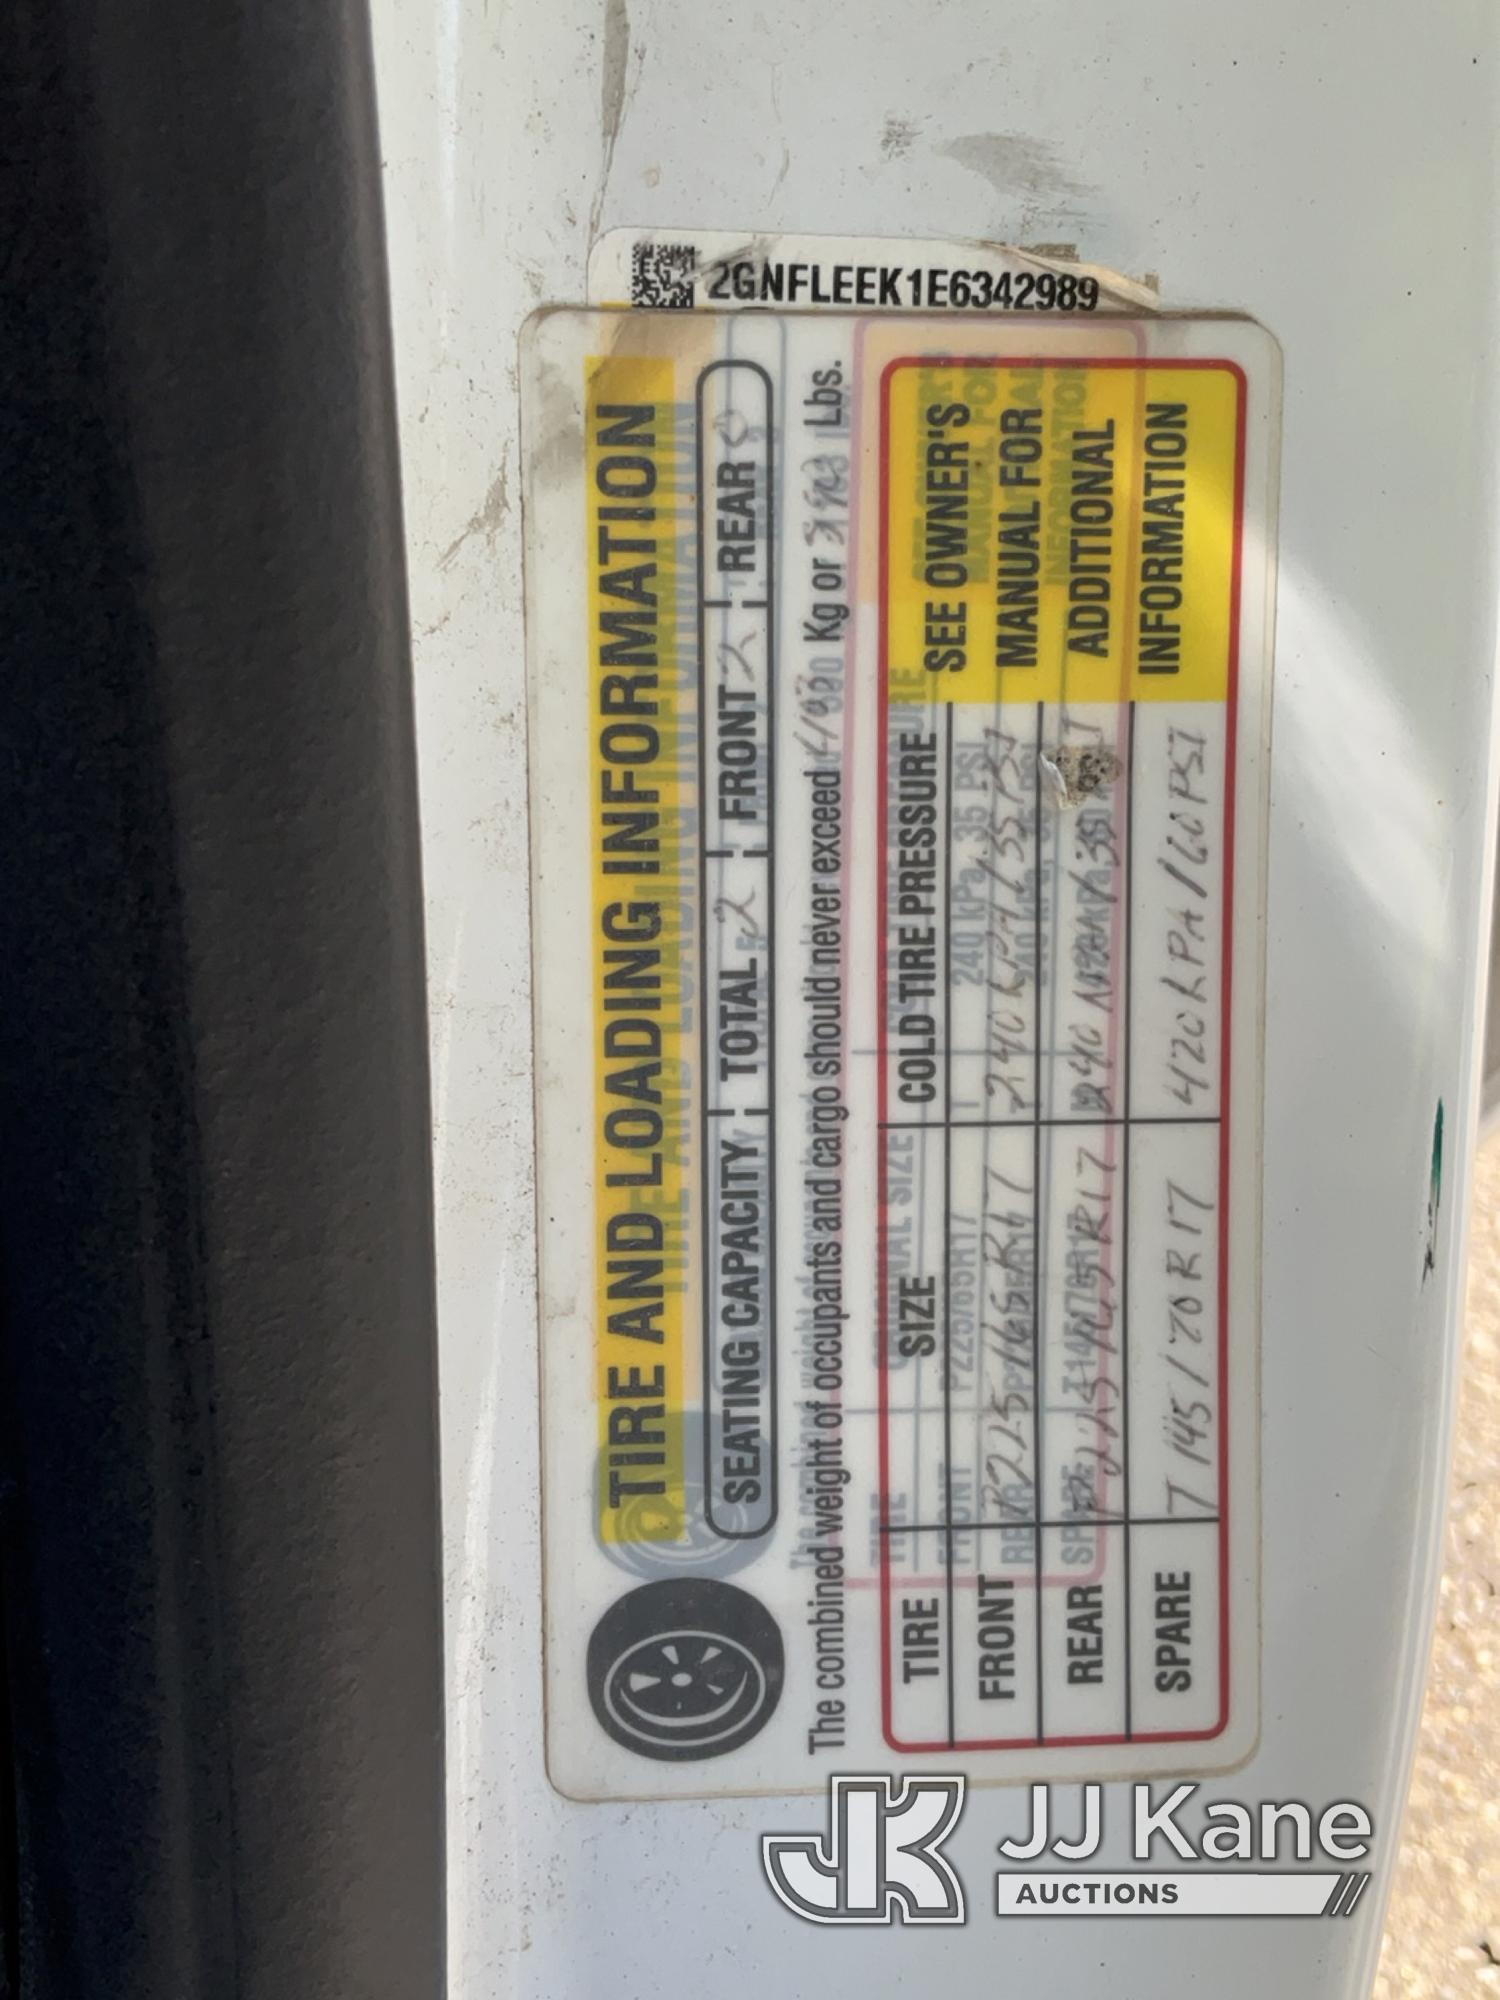 (South Beloit, IL) 2014 Chevrolet Equinox AWD 4-Door Sport Utility Vehicle Runs & Moves) (Rust Damag